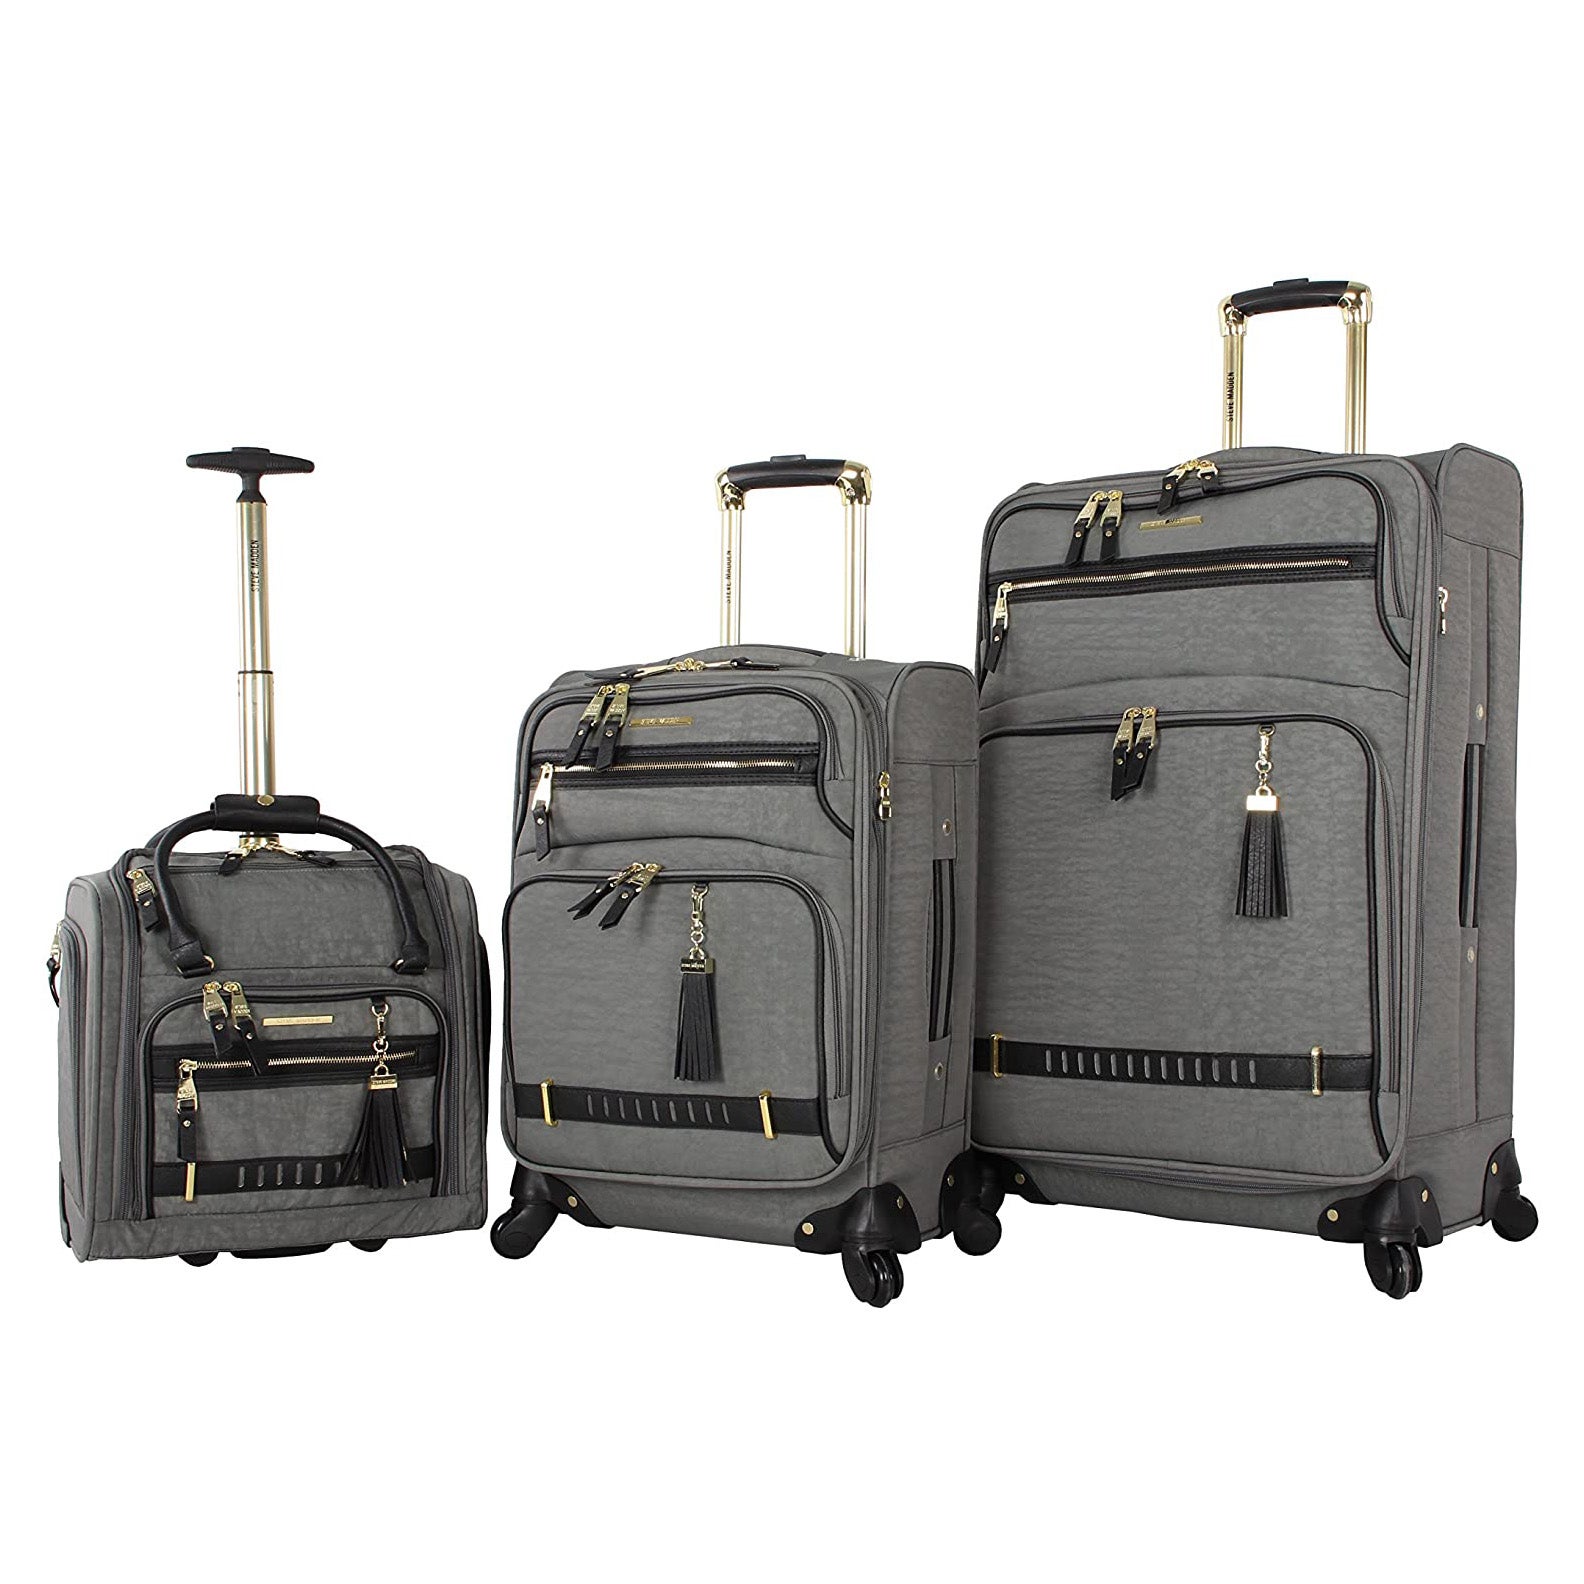 Steve Madden Designer Luggage Collection 3-Piece Set